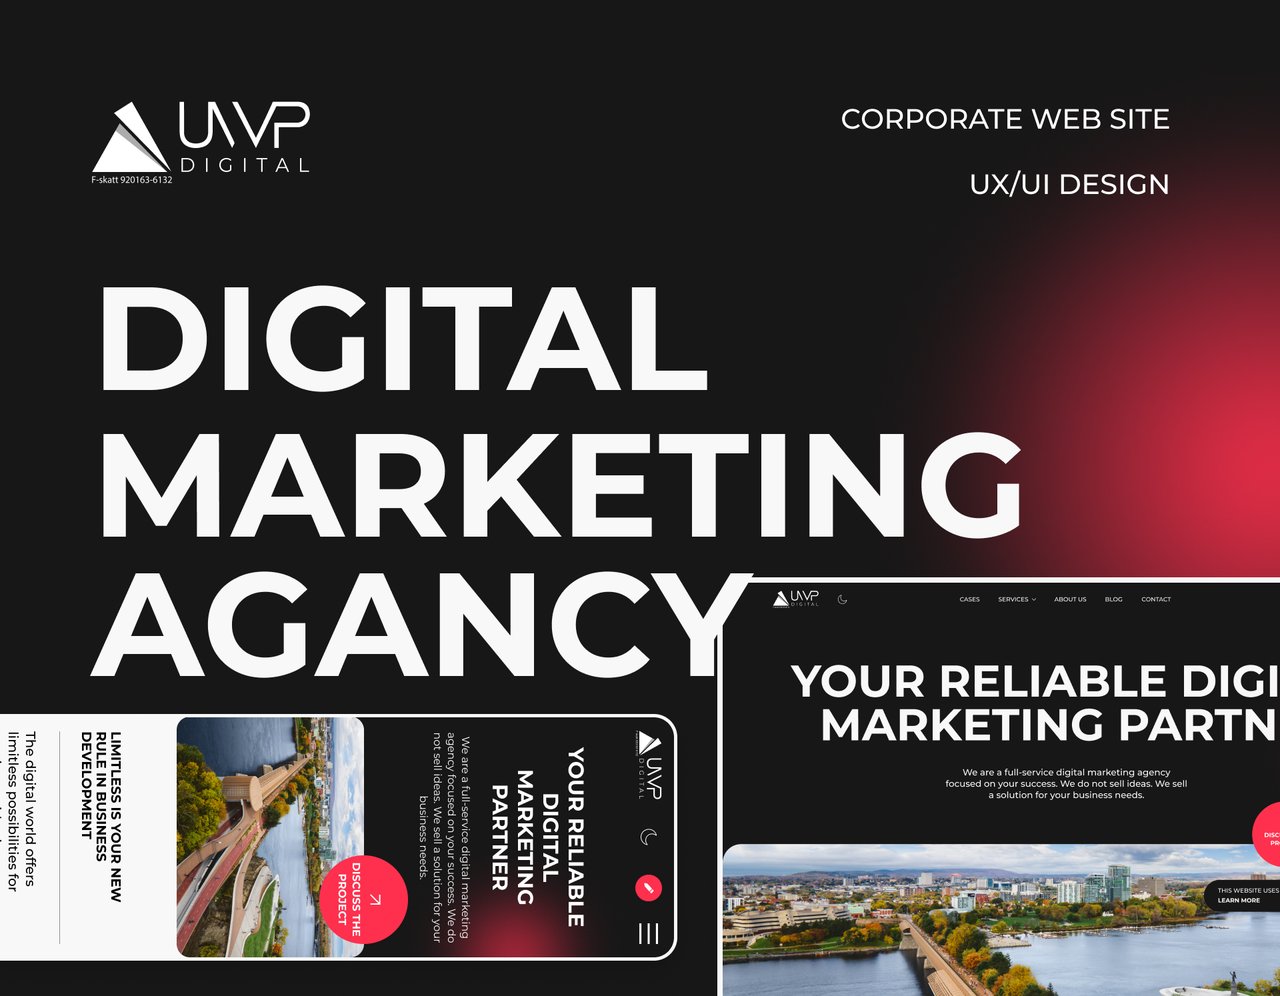 Web site for Digital Marketing Agency